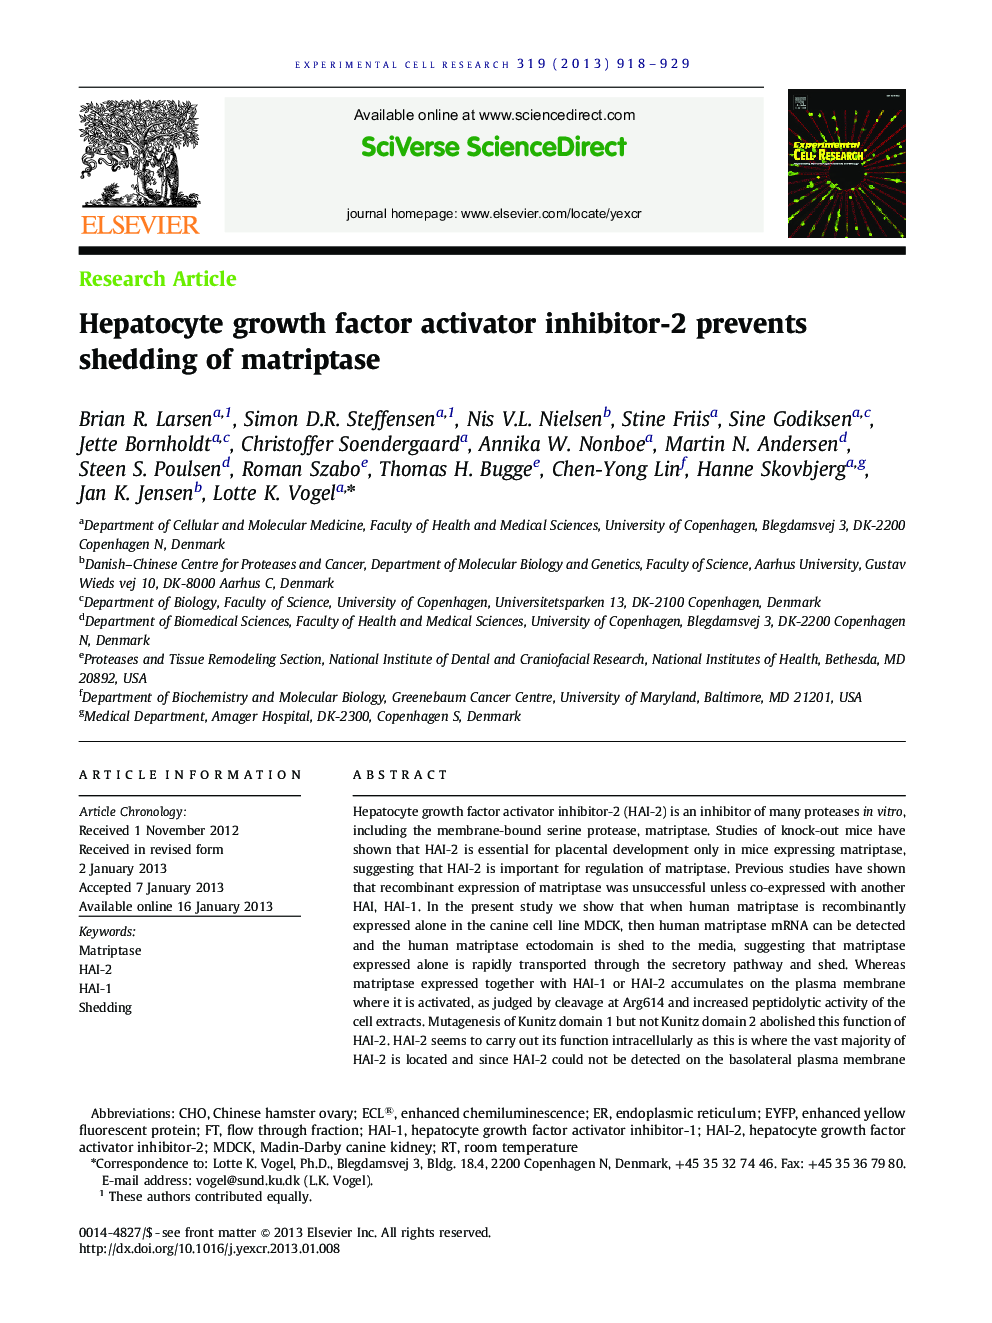 Hepatocyte growth factor activator inhibitor-2 prevents shedding of matriptase